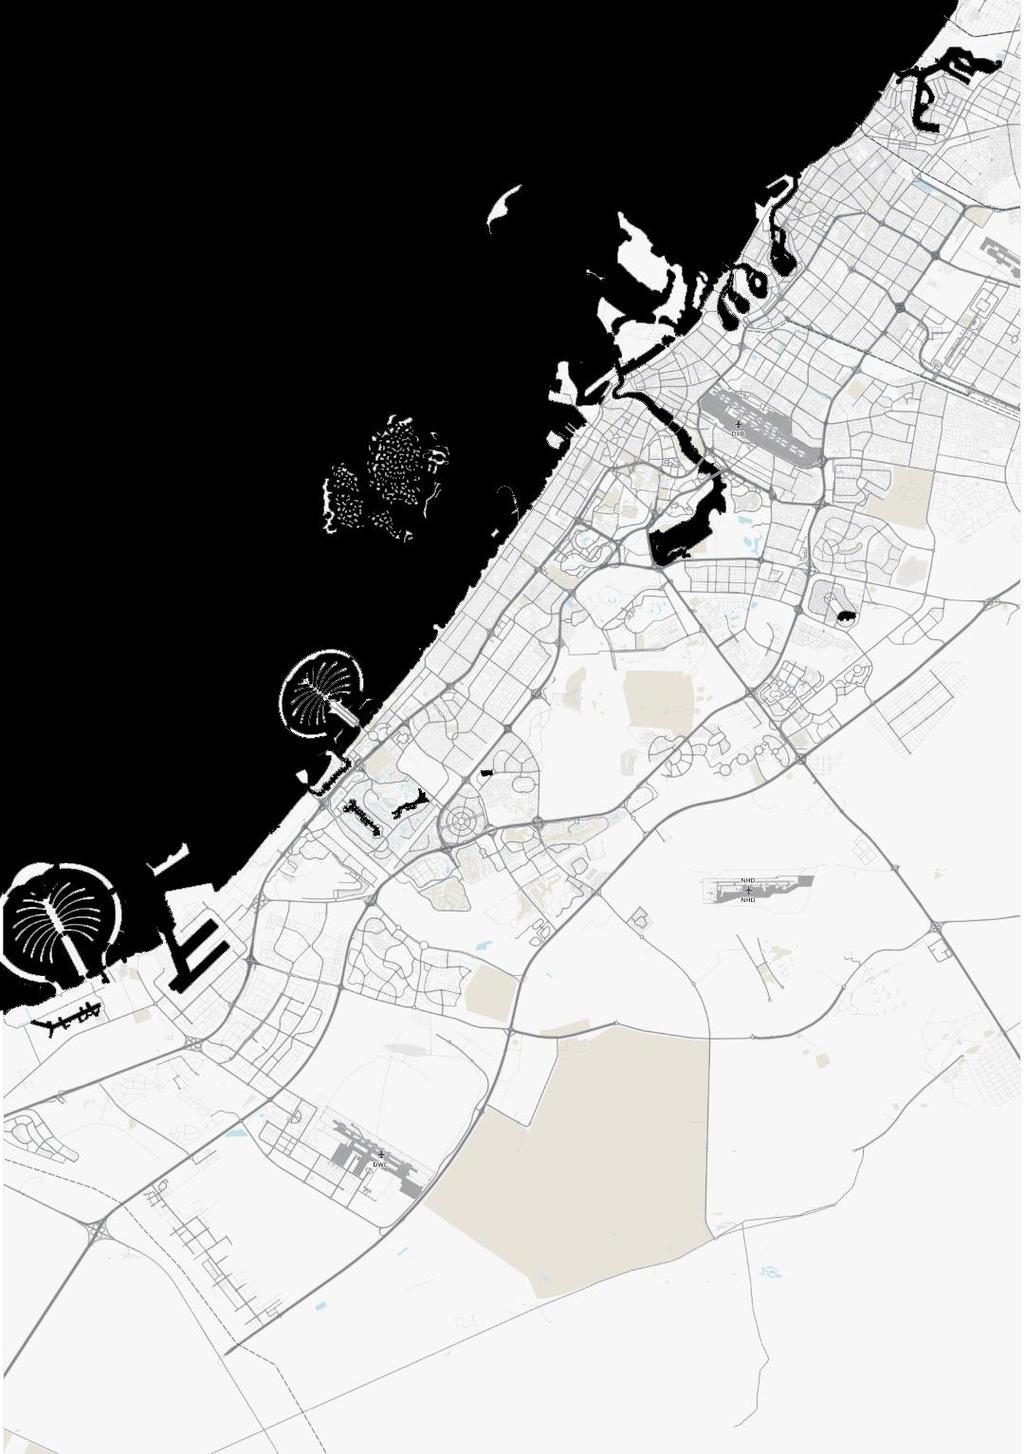 Digital Geography of Dubai Sheikh Zayed Road Deira Bur Dubai 13 Locations Surveyed Free Zone Onshore DIFC 46% 815,000 sqm 16% Technology Finance Government Other 19% Business